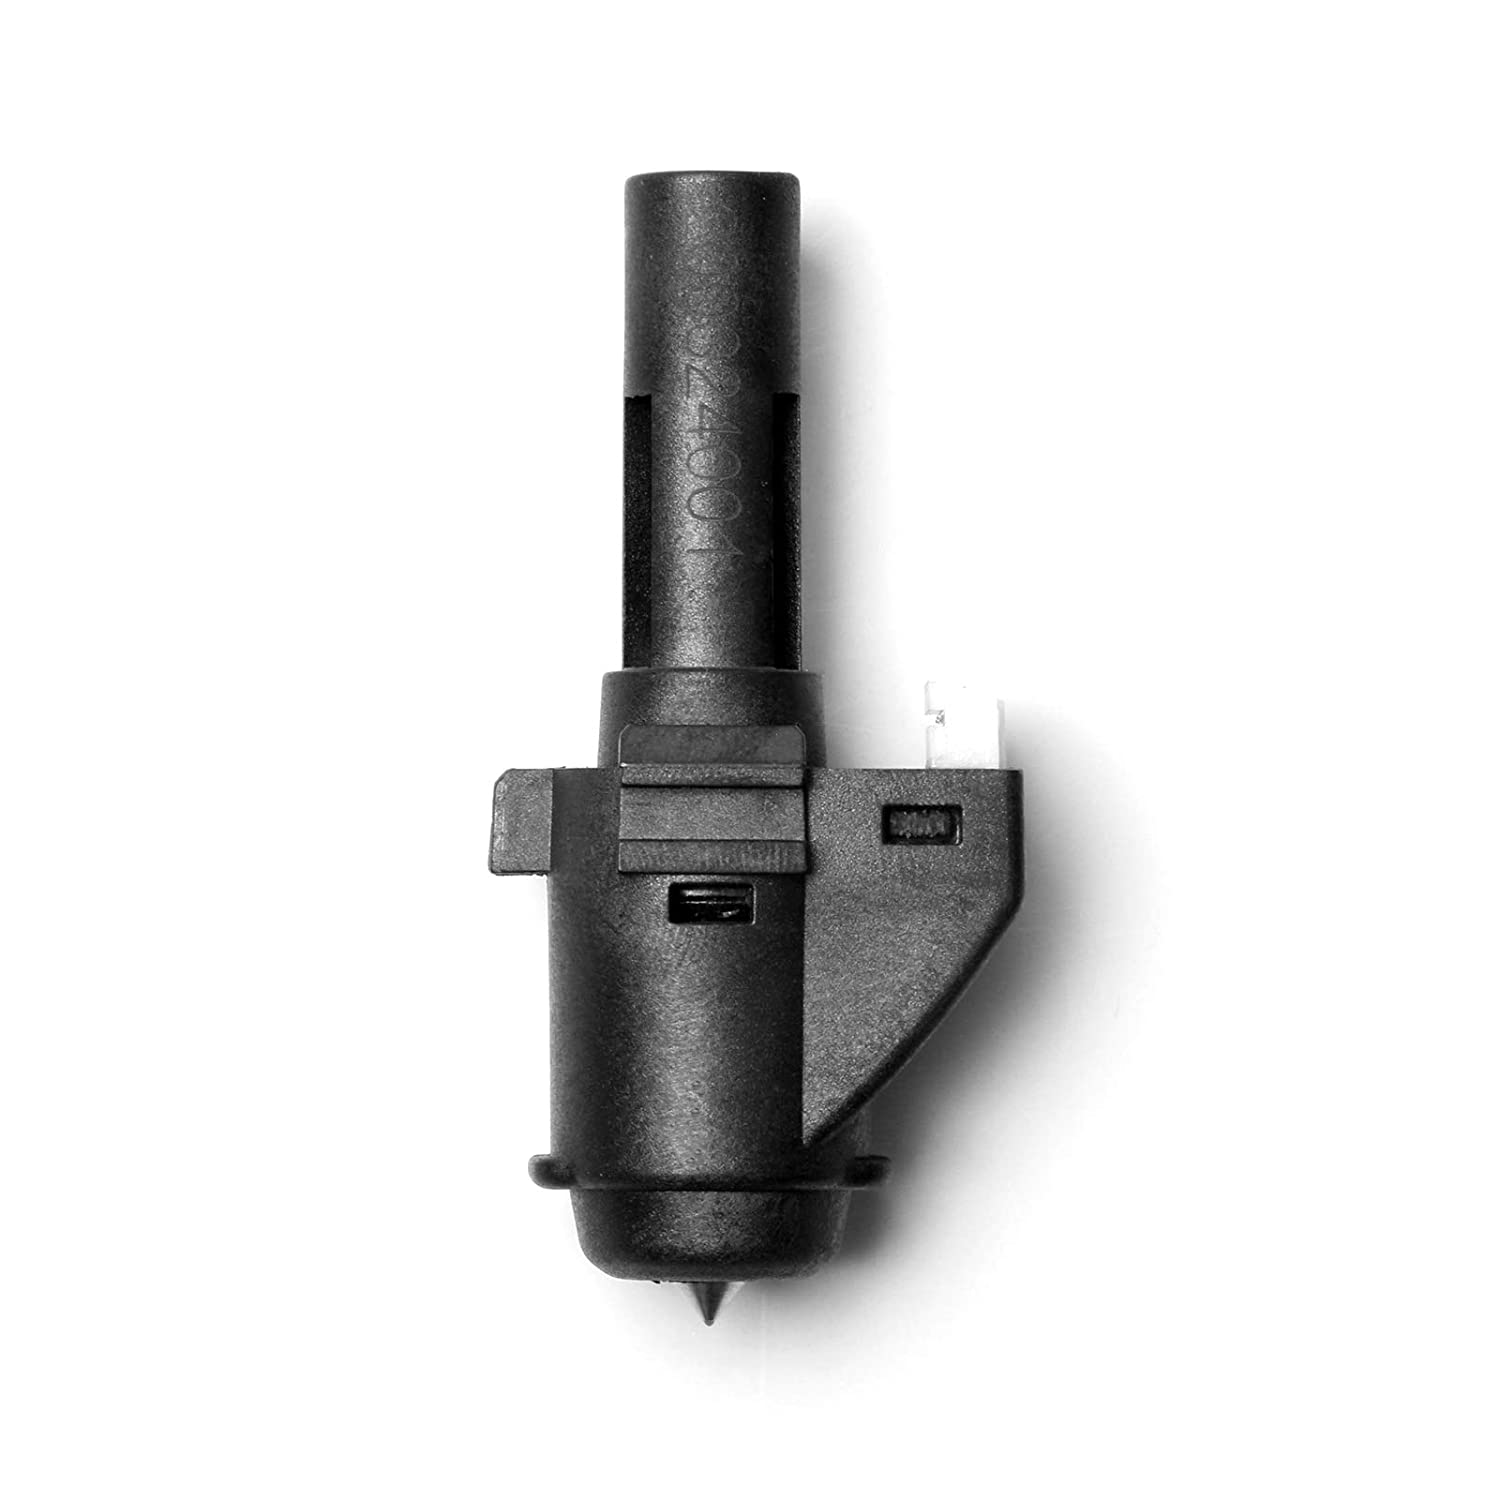 High Temp 0.6mm Extruder Nozzle Assembly for Flashforge Adventurer 3 Series 3D Printer